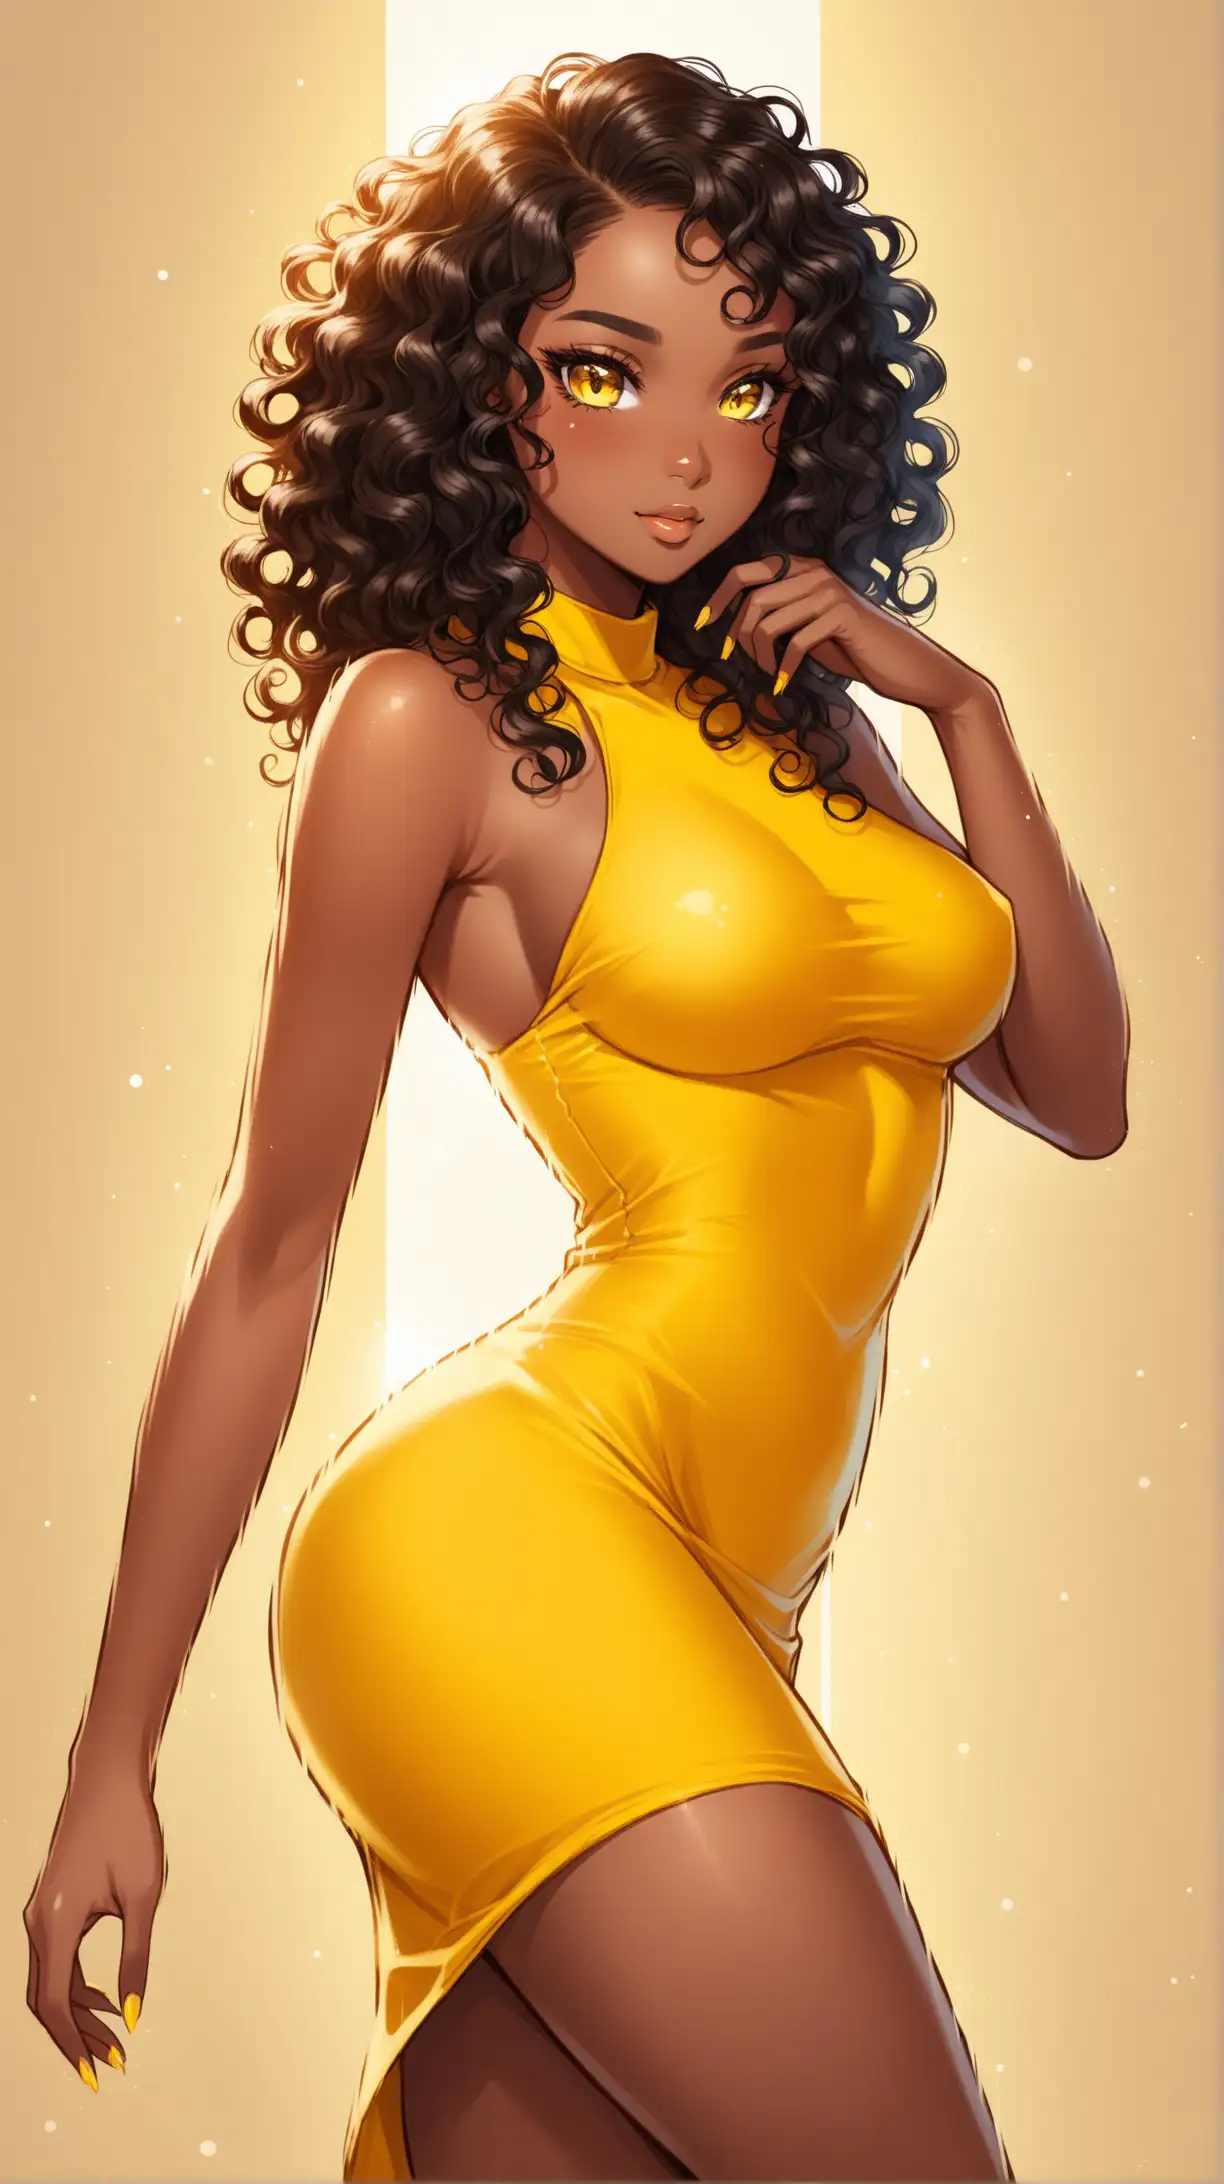 Ebony girl, curly hair, yellow eyes, wearing a tight yellow dress